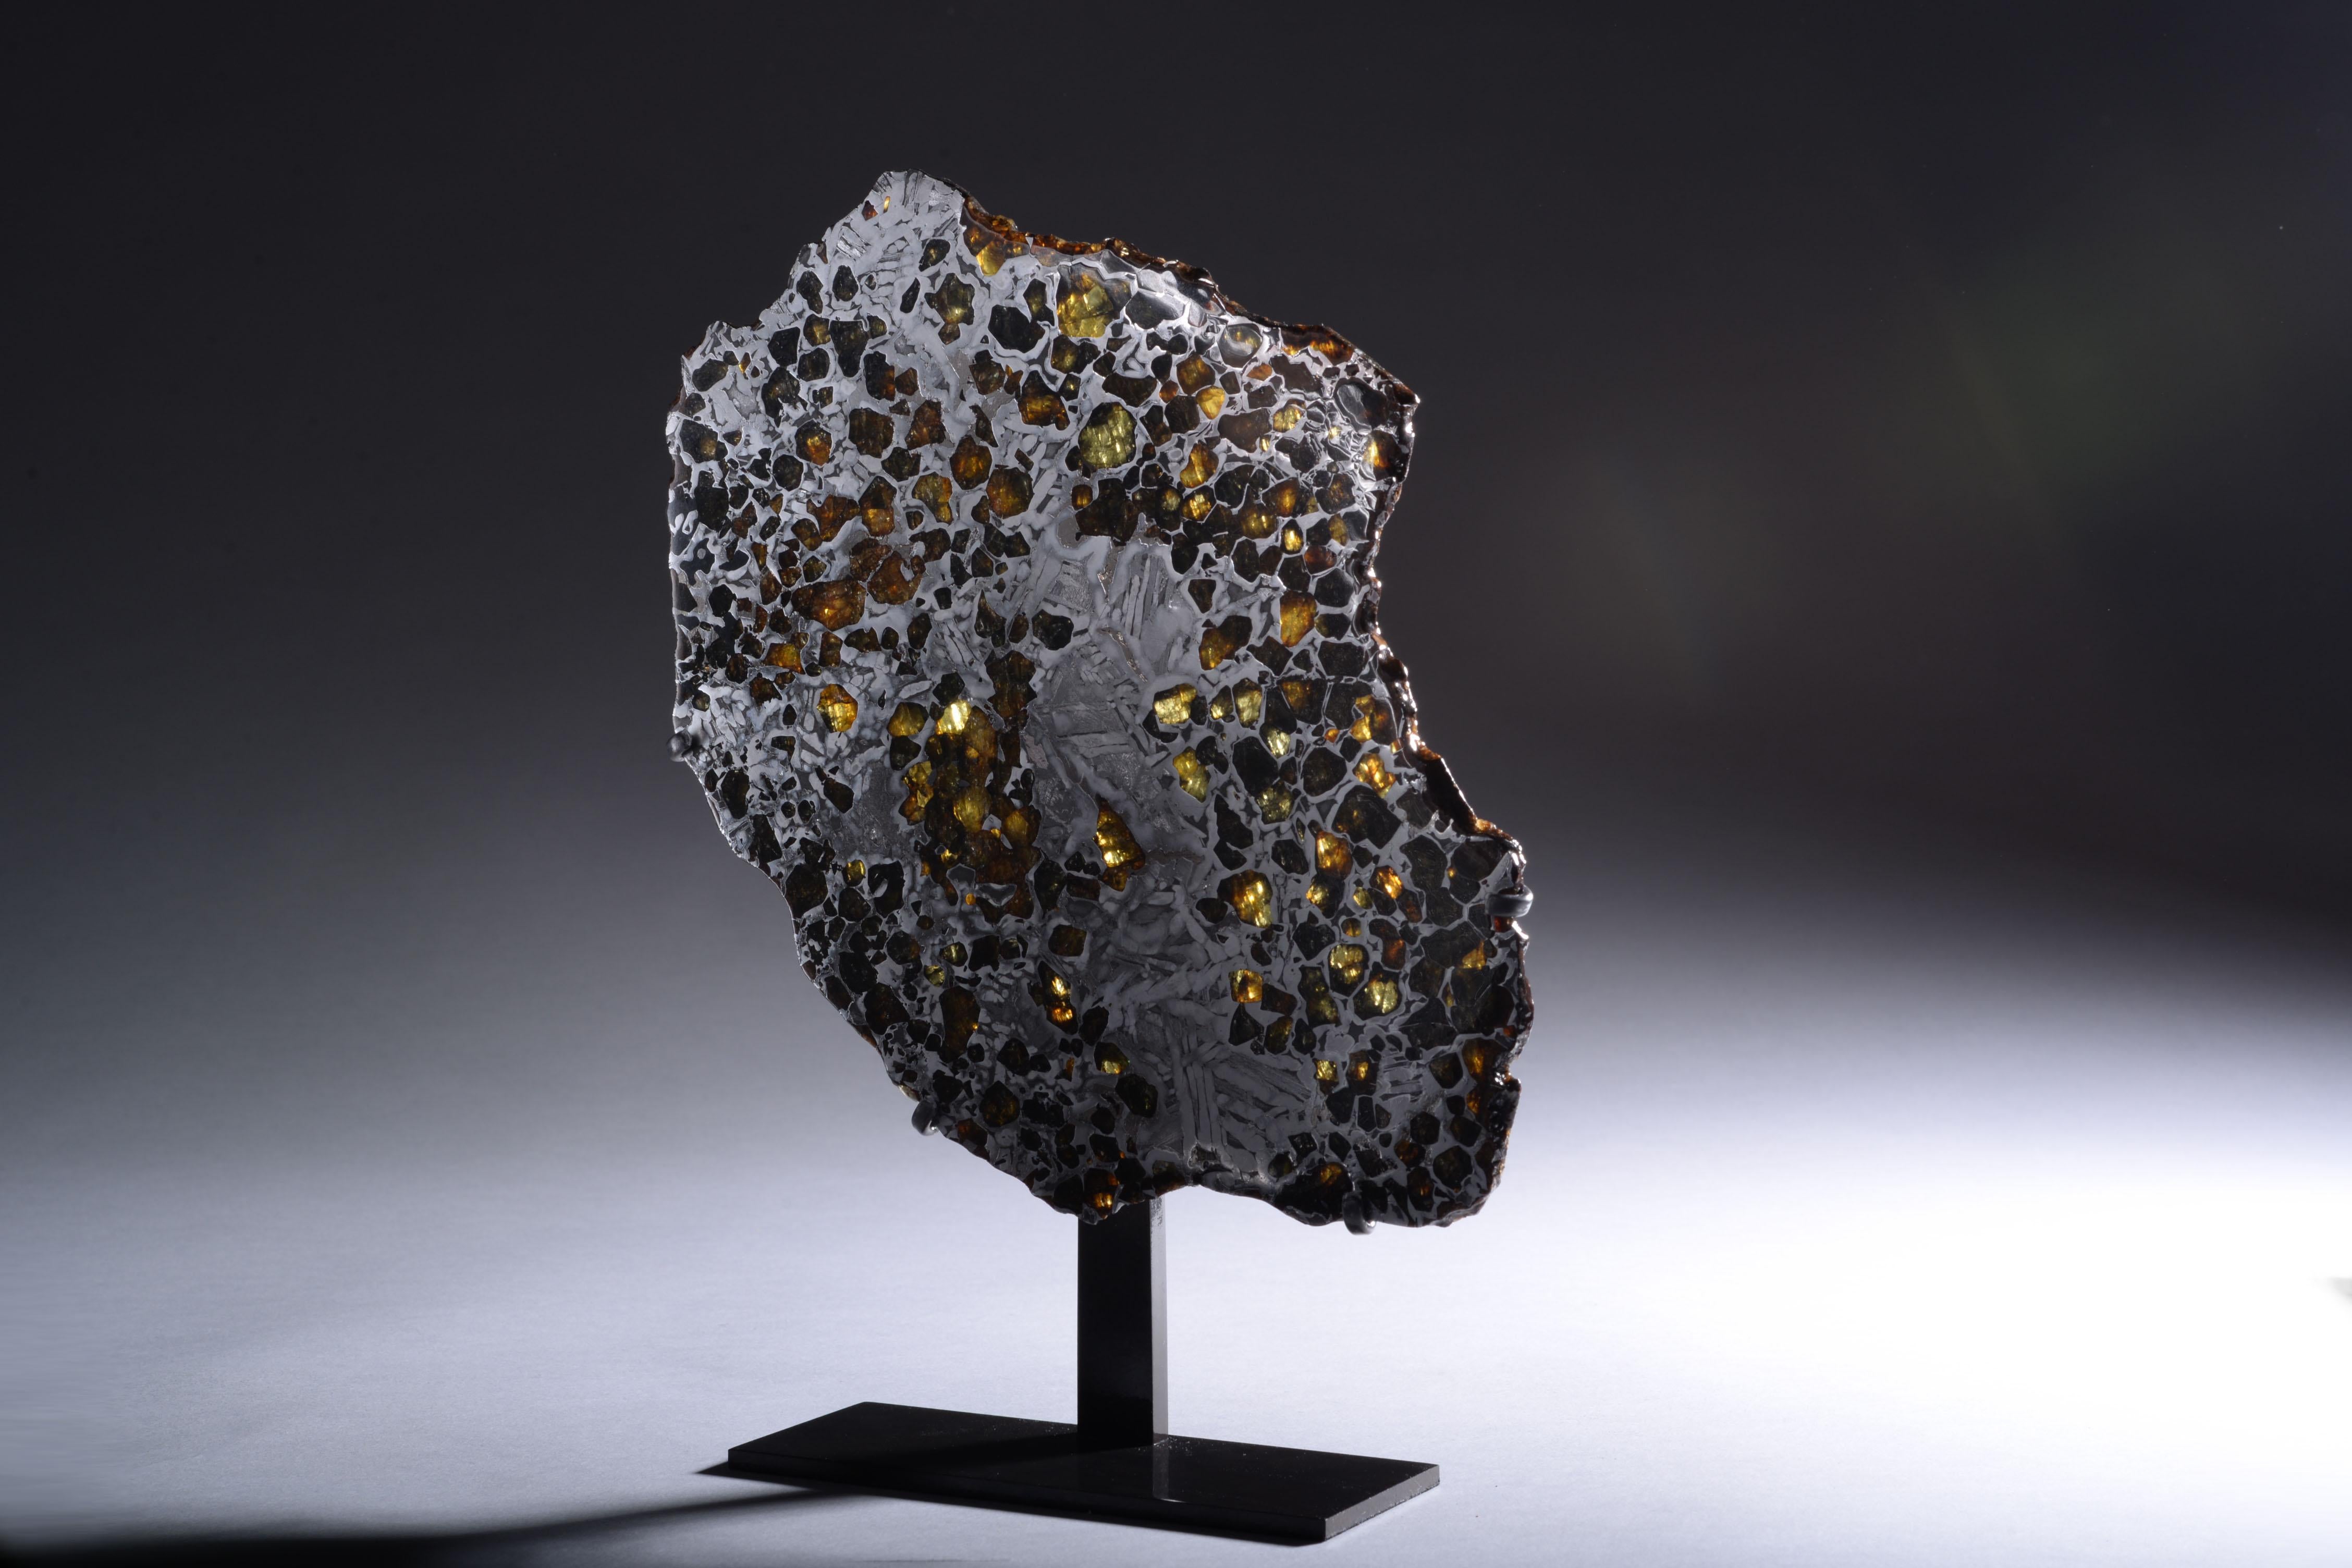 meteorite cross section